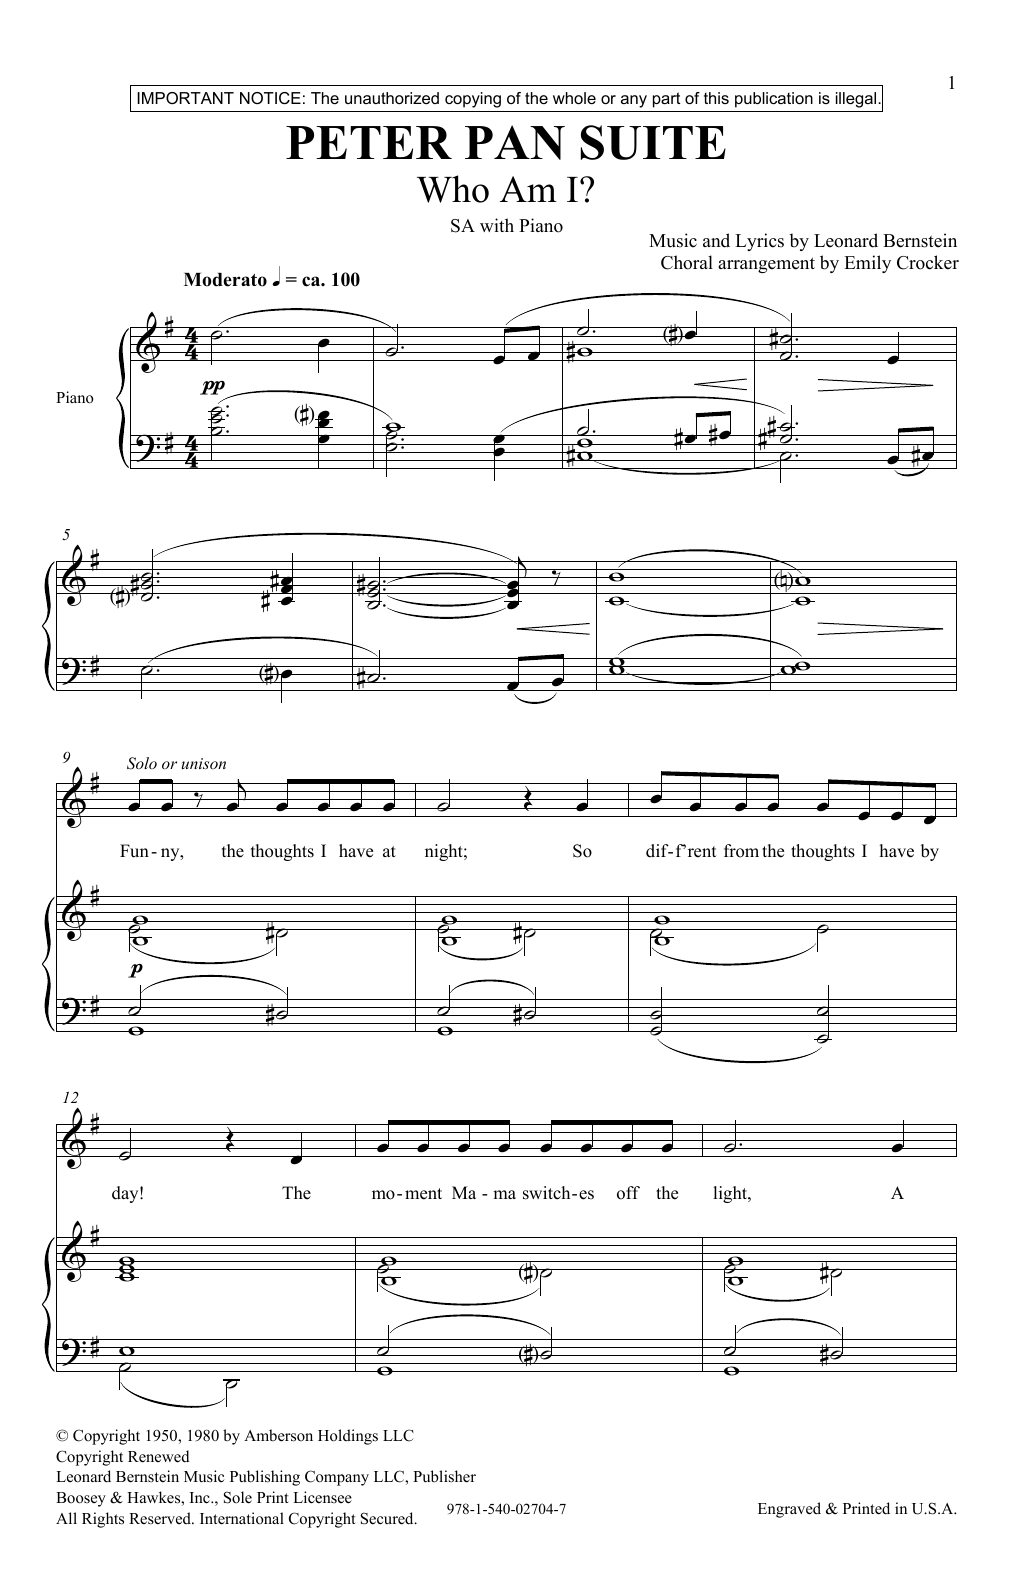 Leonard Bernstein Peter Pan Suite (Collection) (arr. Emily Crocker) Sheet Music Notes & Chords for Choir - Download or Print PDF